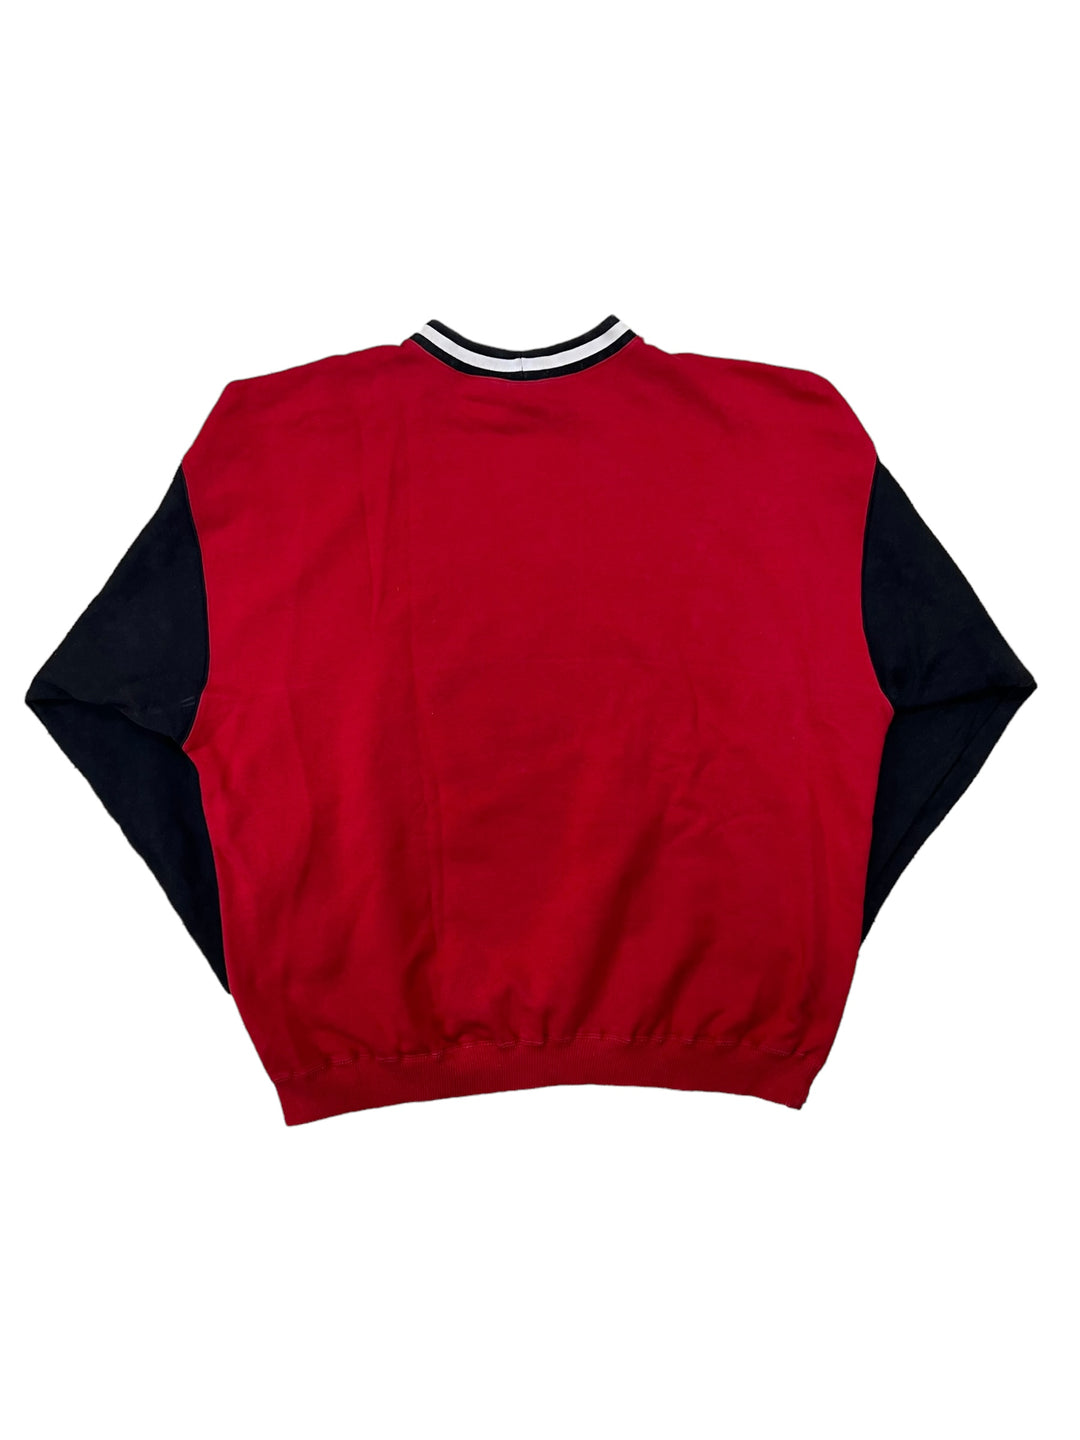 Nike vintage 90’s Sweatshirt Men’s Extra large